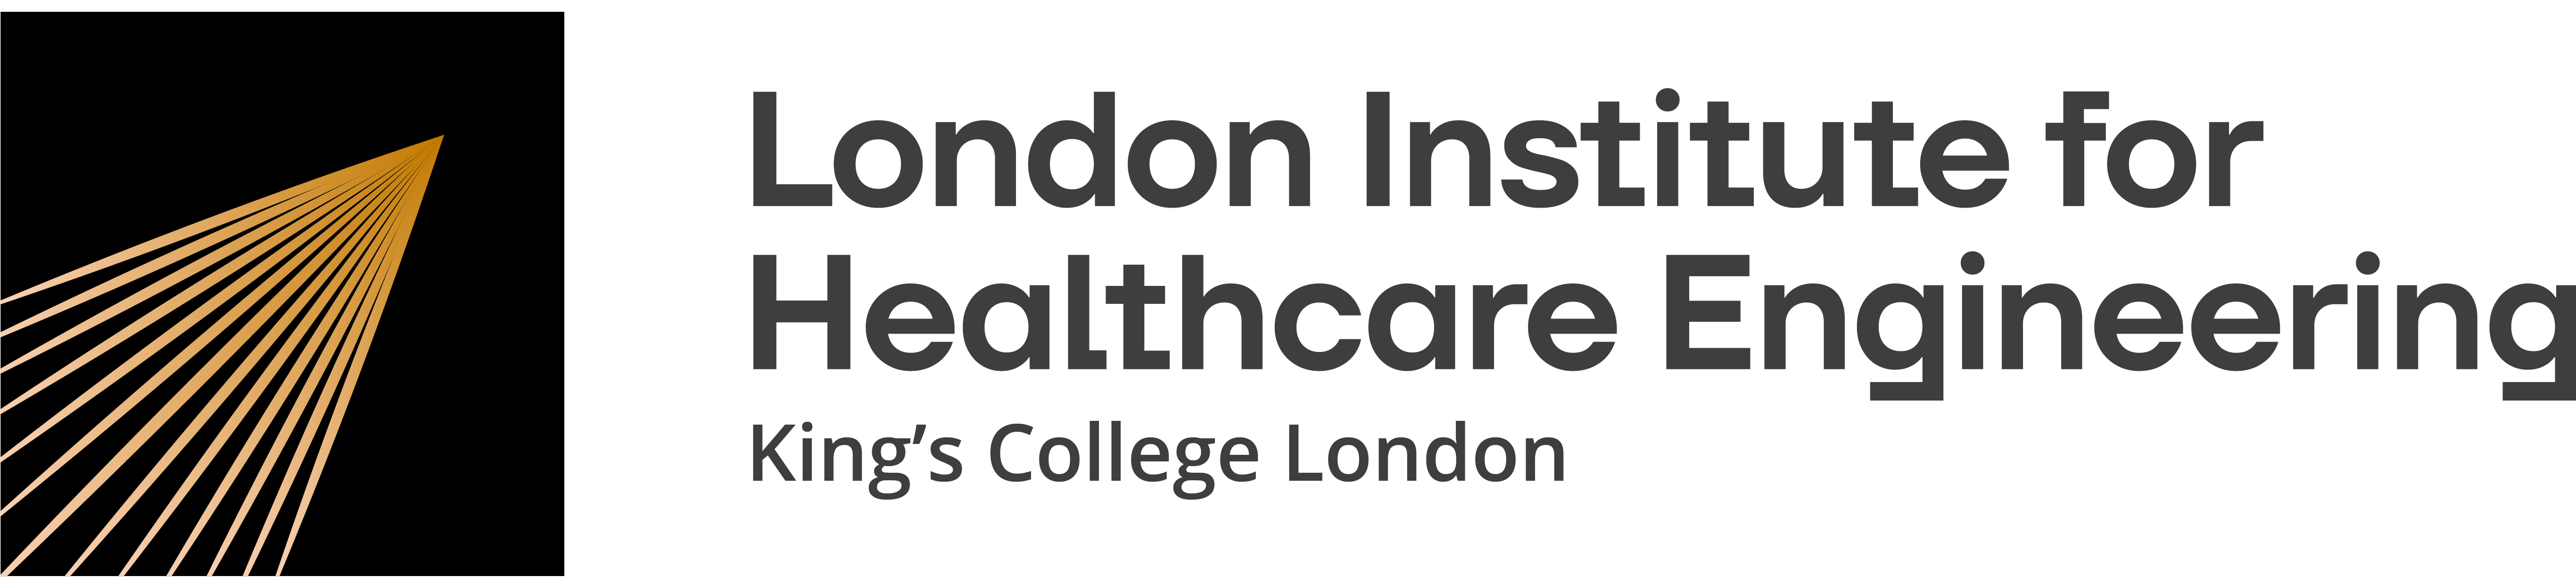 London Institute for Healthcare Engineering logo